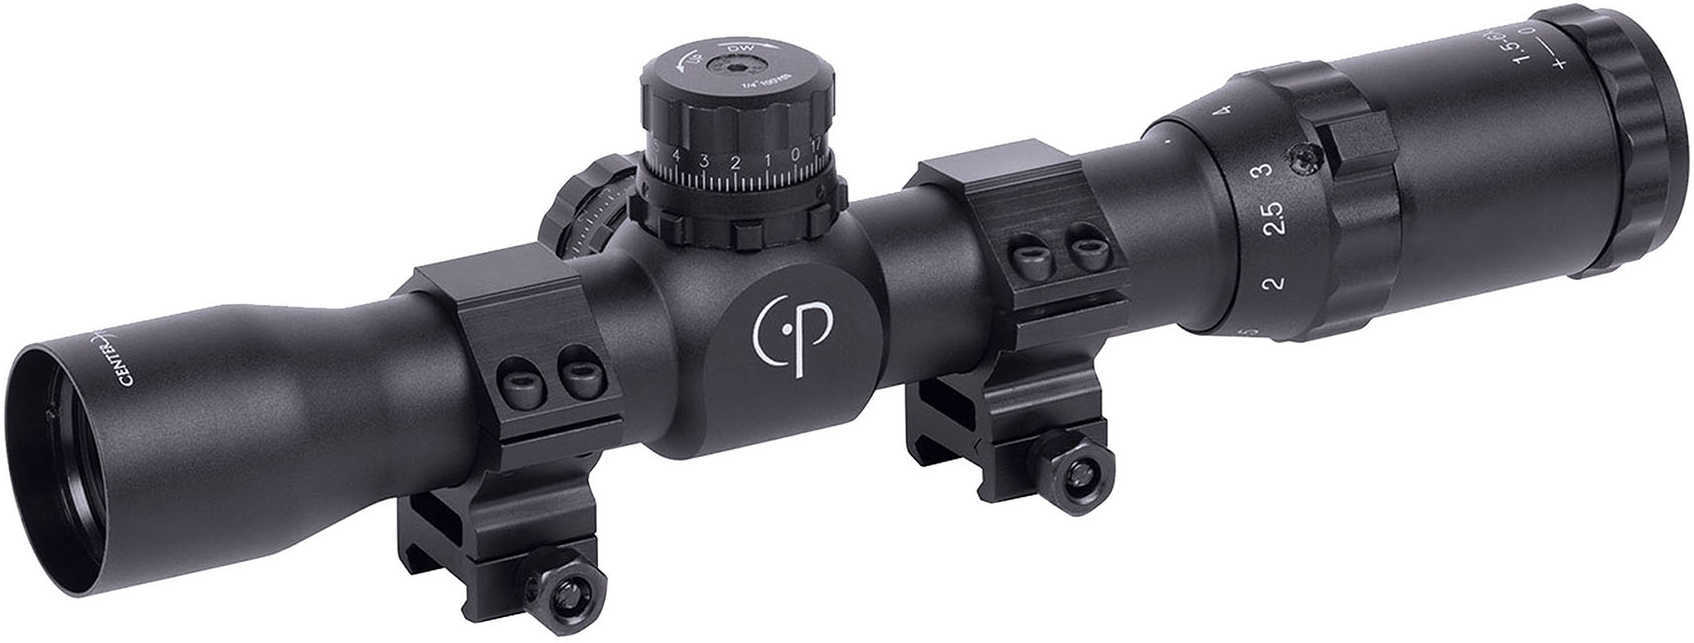 Crosman PLT Riflescope 1.5-6x32mm Close Range, Black